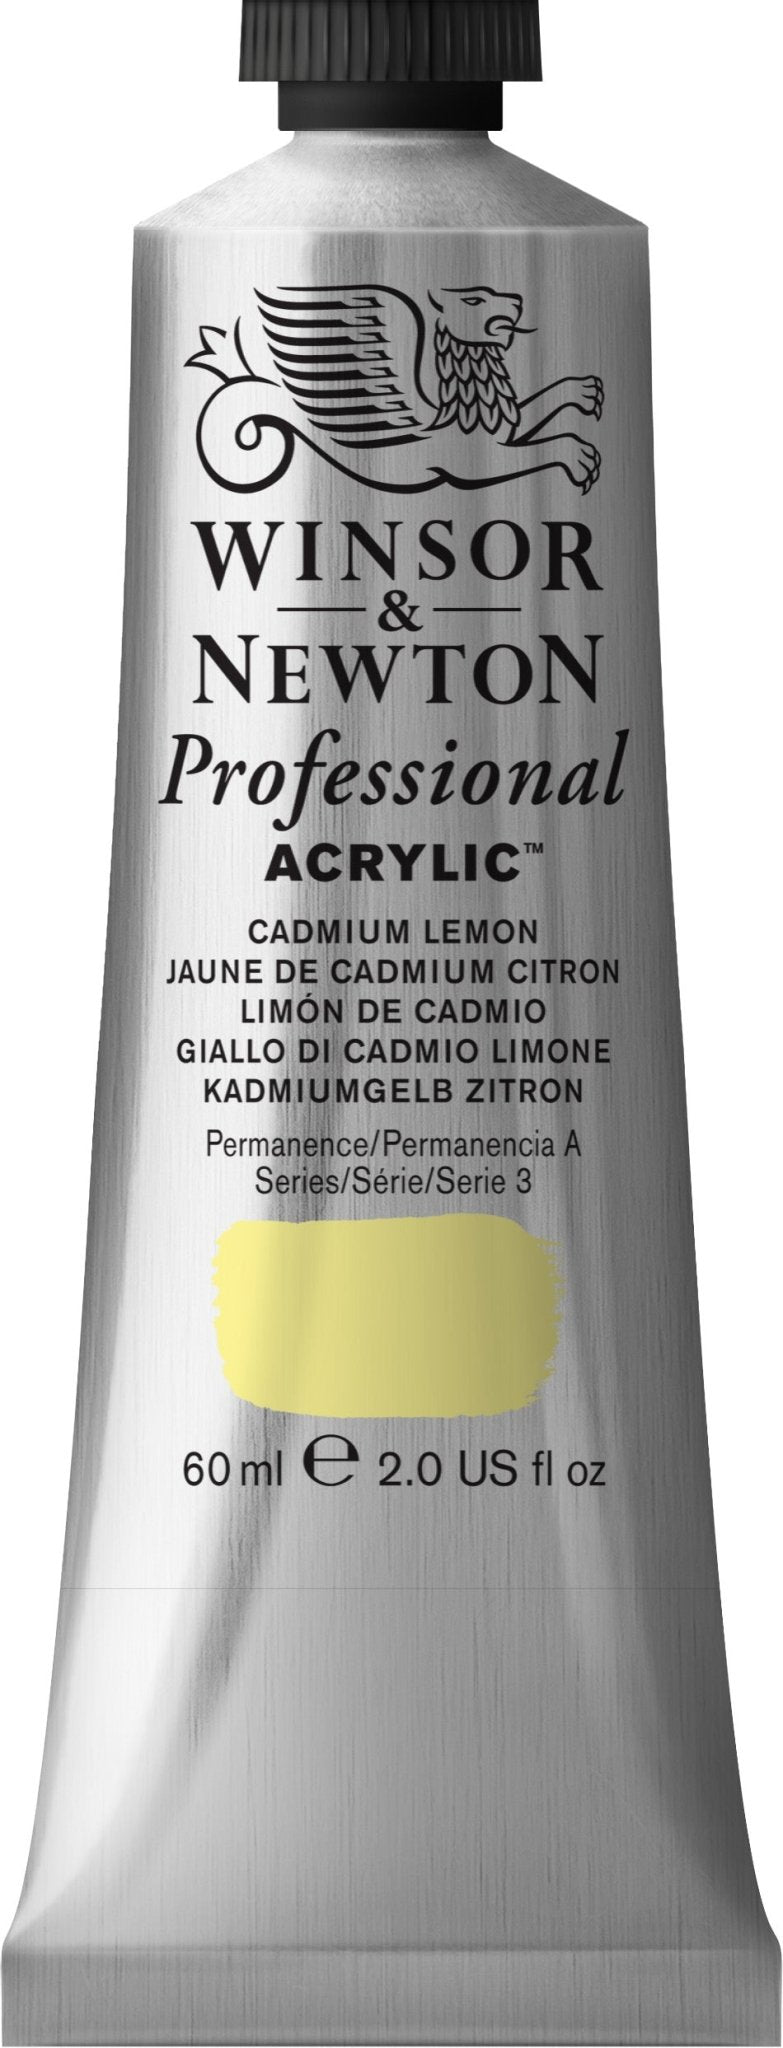 W & N Professional Acrylic 60ml Cadmium Lemon - theartshop.com.au